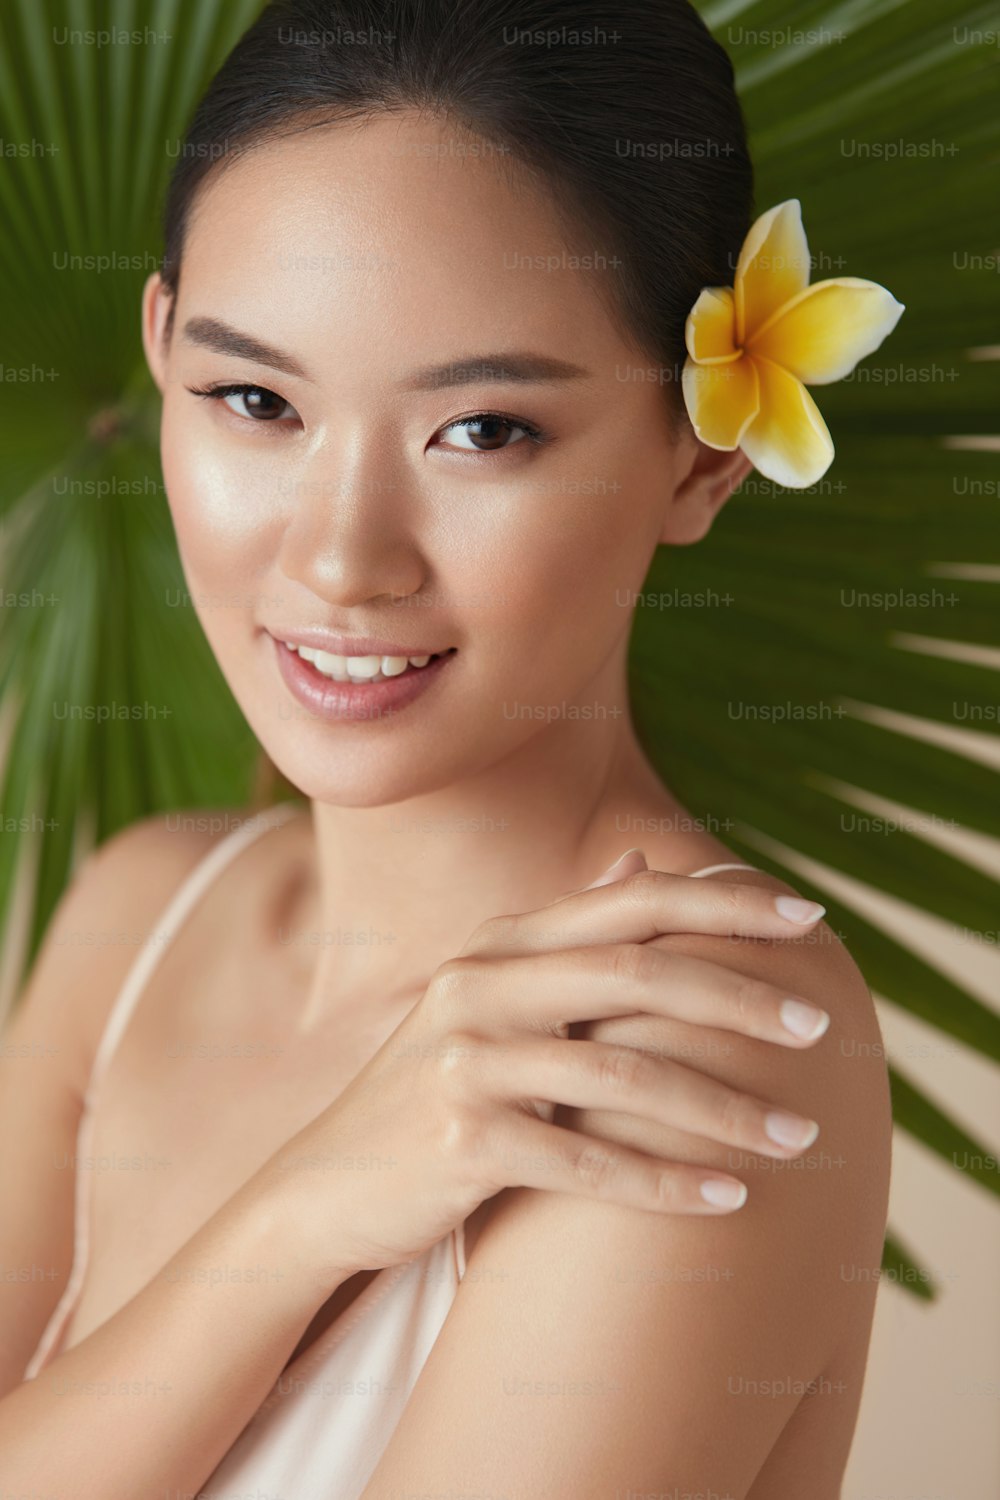 Beauty Model Near Palm With Flower In Hair Tender Asian Woman Touching Shoulder Portrait On